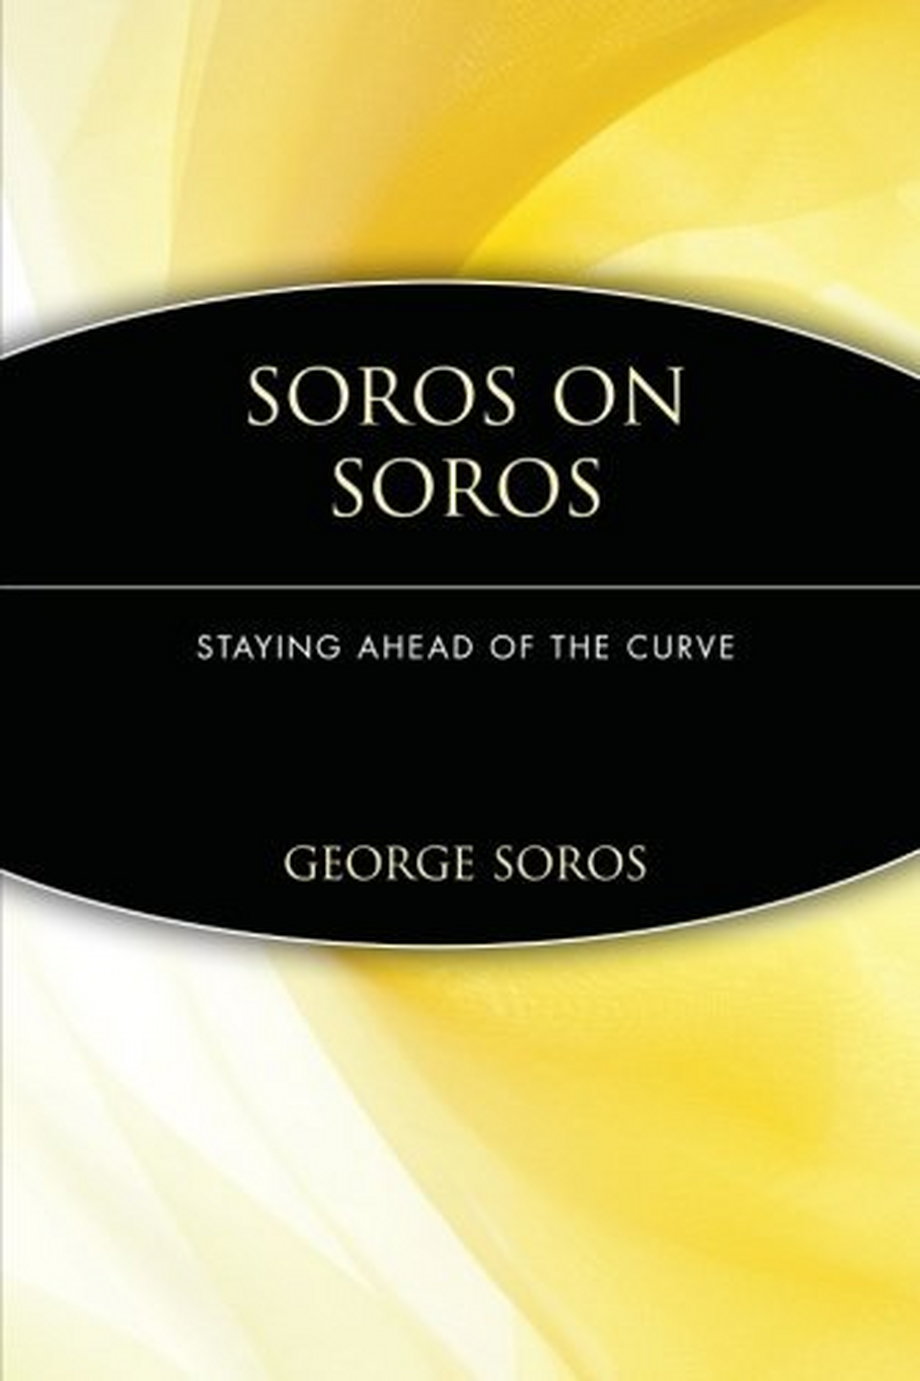 George Soros "Soros on Soros"